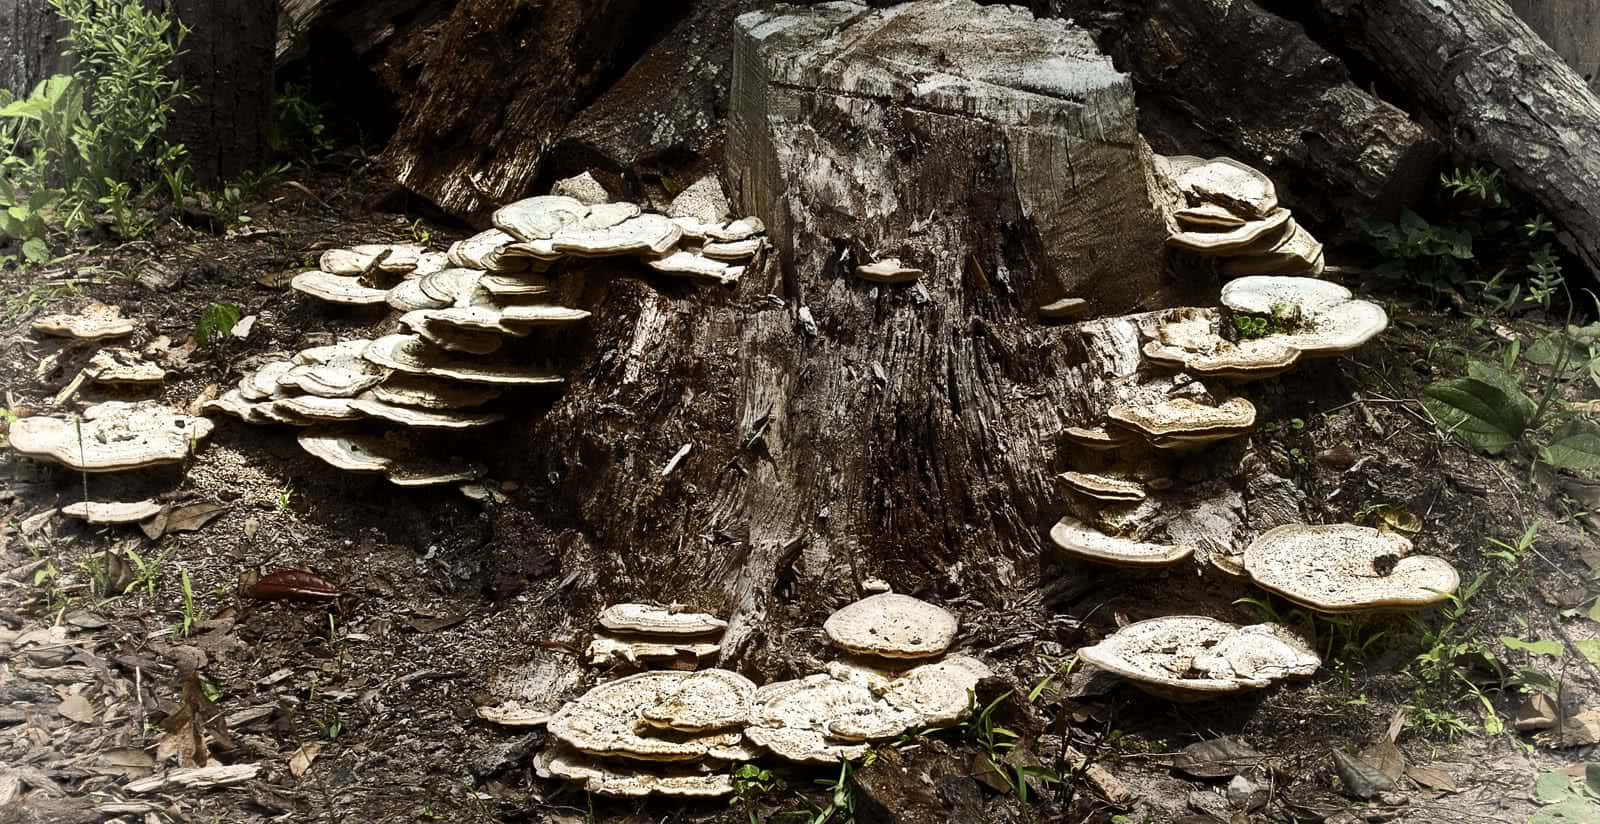 Identify mushrooms based on habitat and features